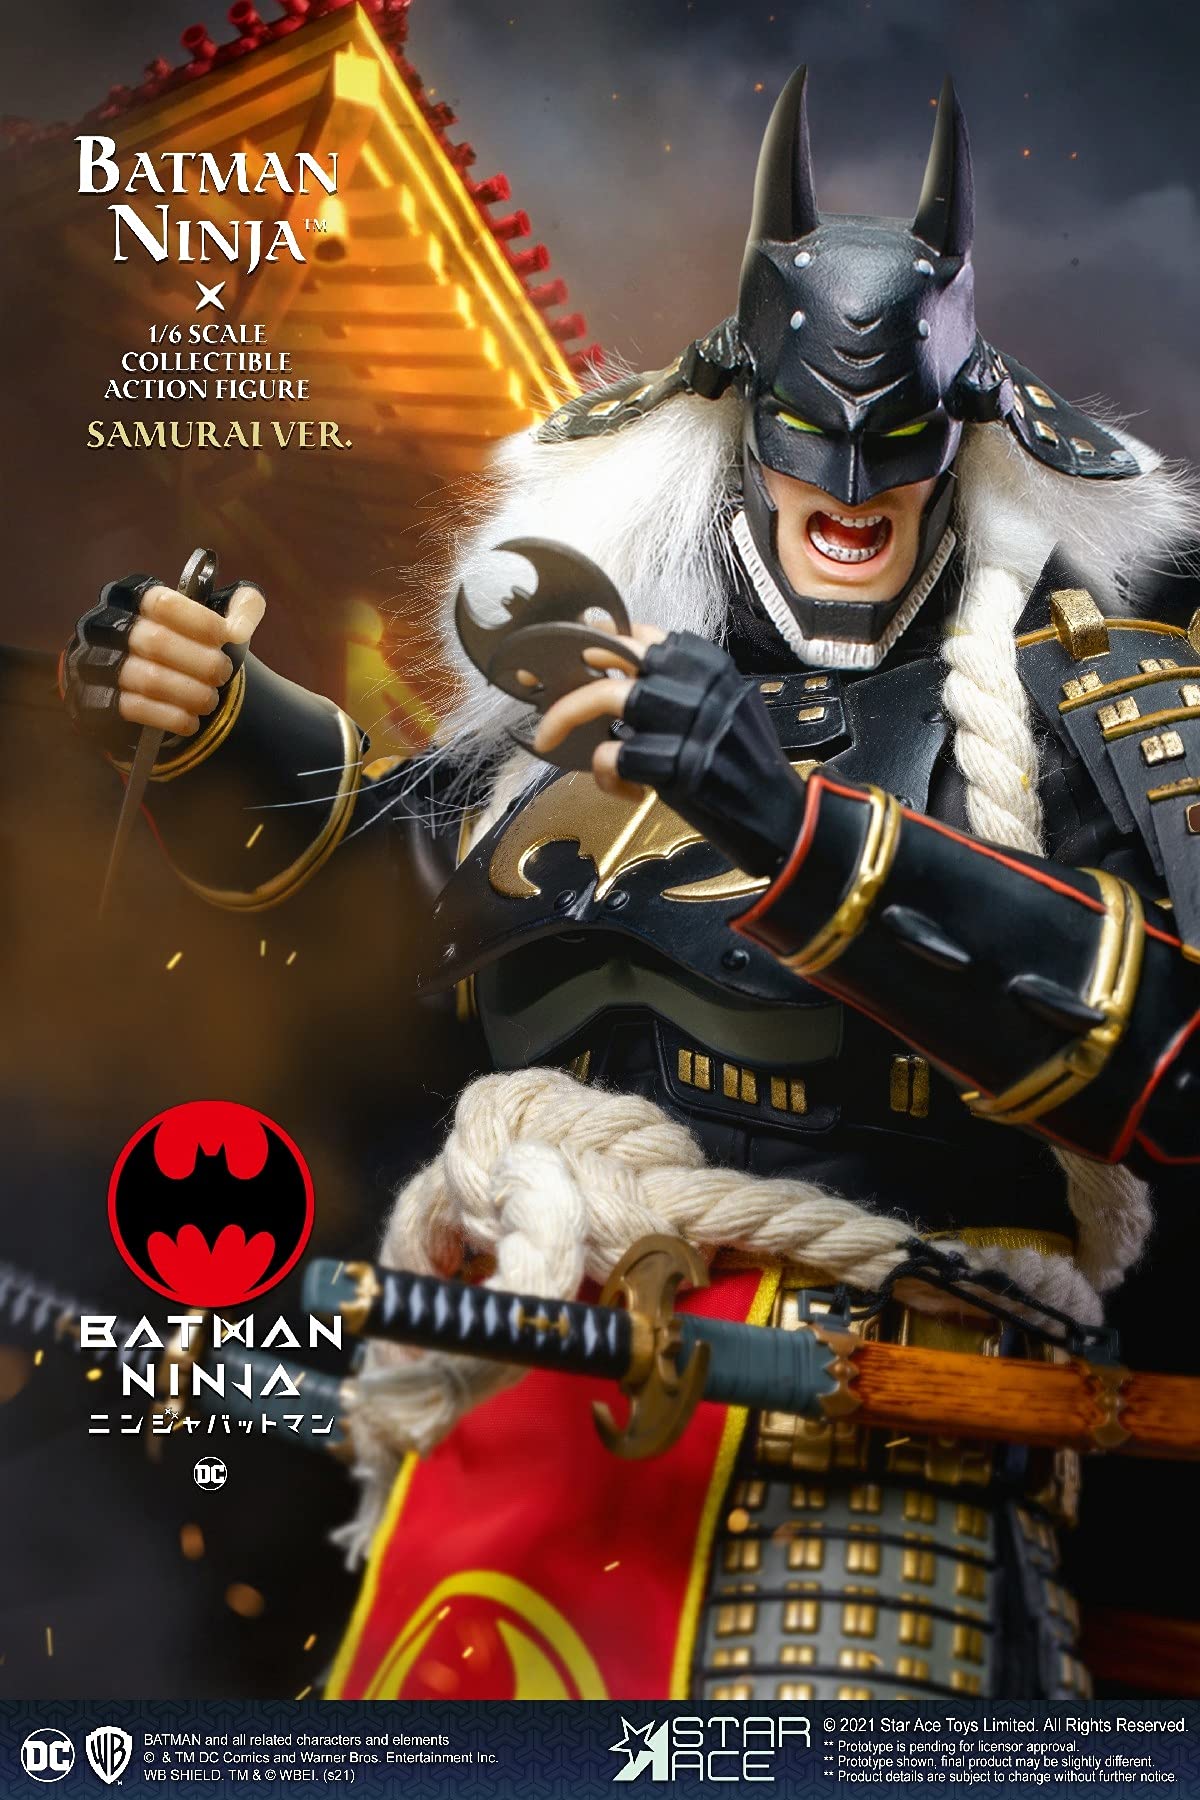 Mua Star Ace Toys Batman Ninja: Samurai  (Deluxe Version with Horse) 1:6  Scale Collectible Action Figure, Multicolor trên Amazon Mỹ chính hãng 2023  | Giaonhan247